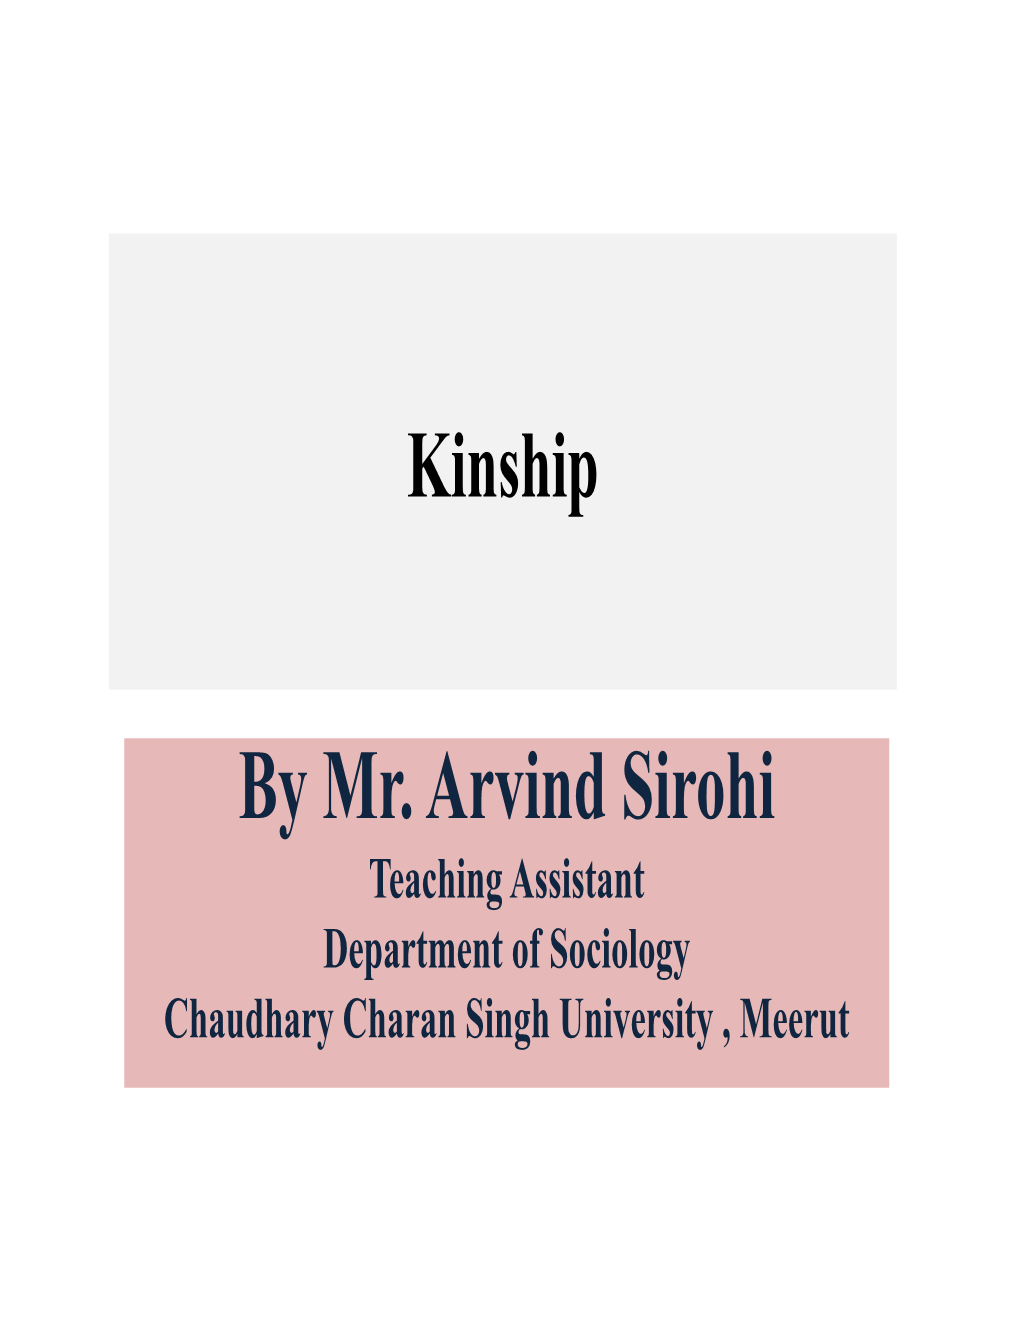 Kinship by Mr. Arvind Sirohi Department of Sociology